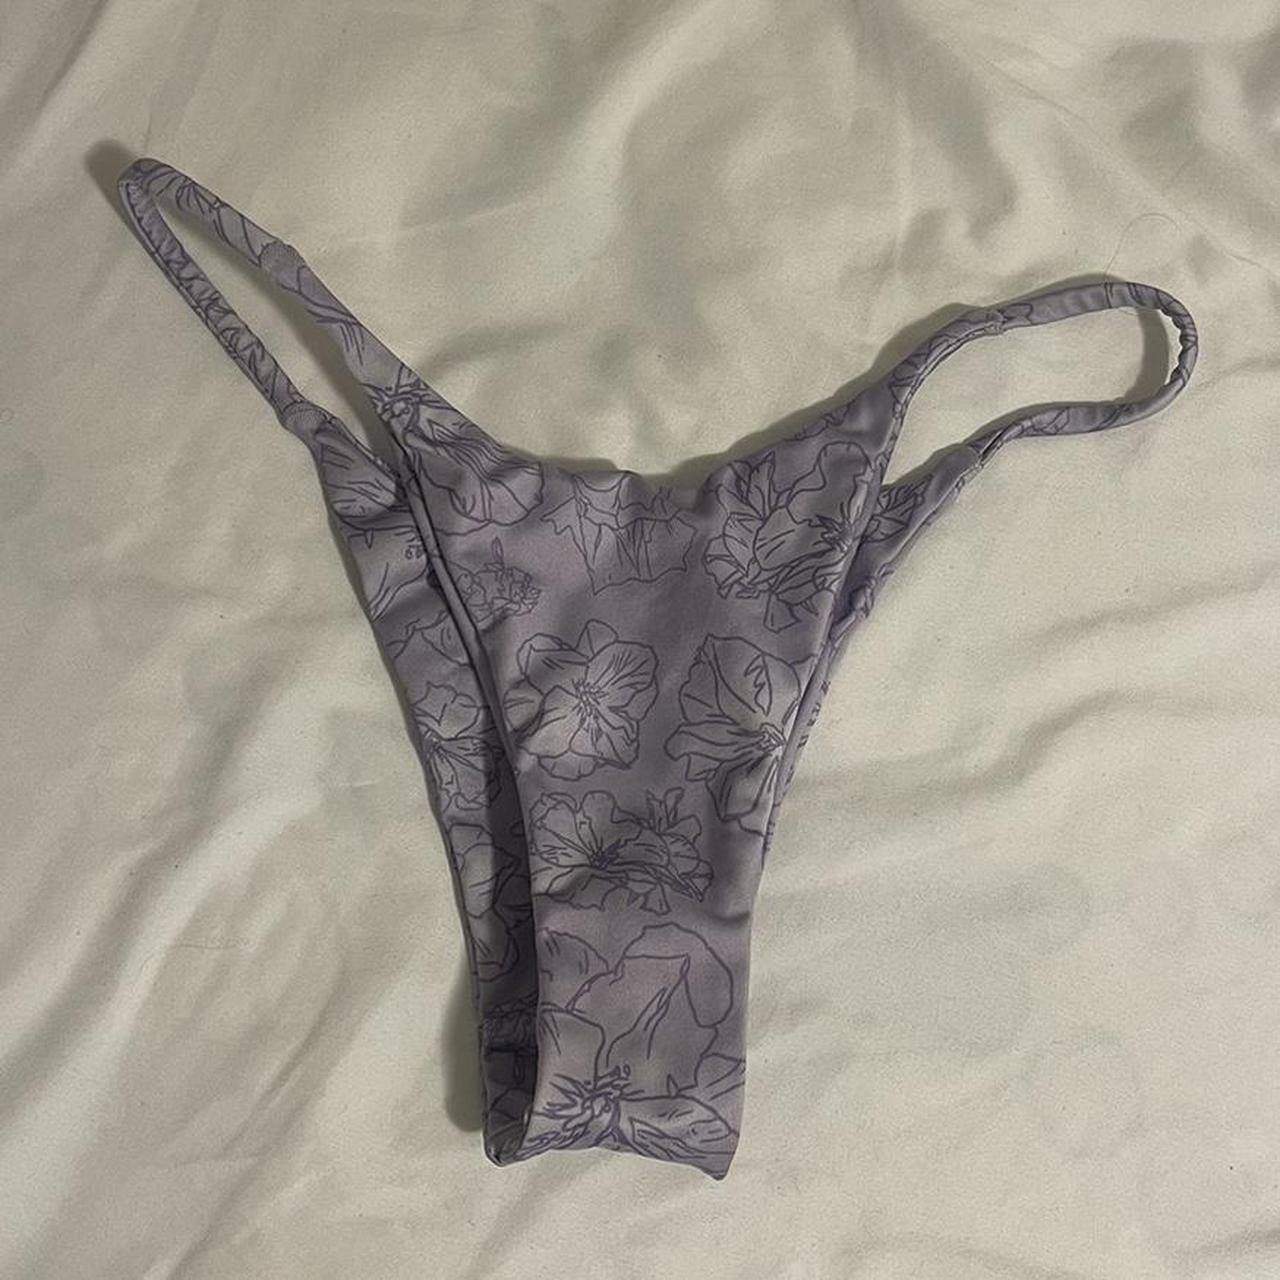 Acacia Swimwear Women's Purple and White Bikinis-and-tankini-sets (3)